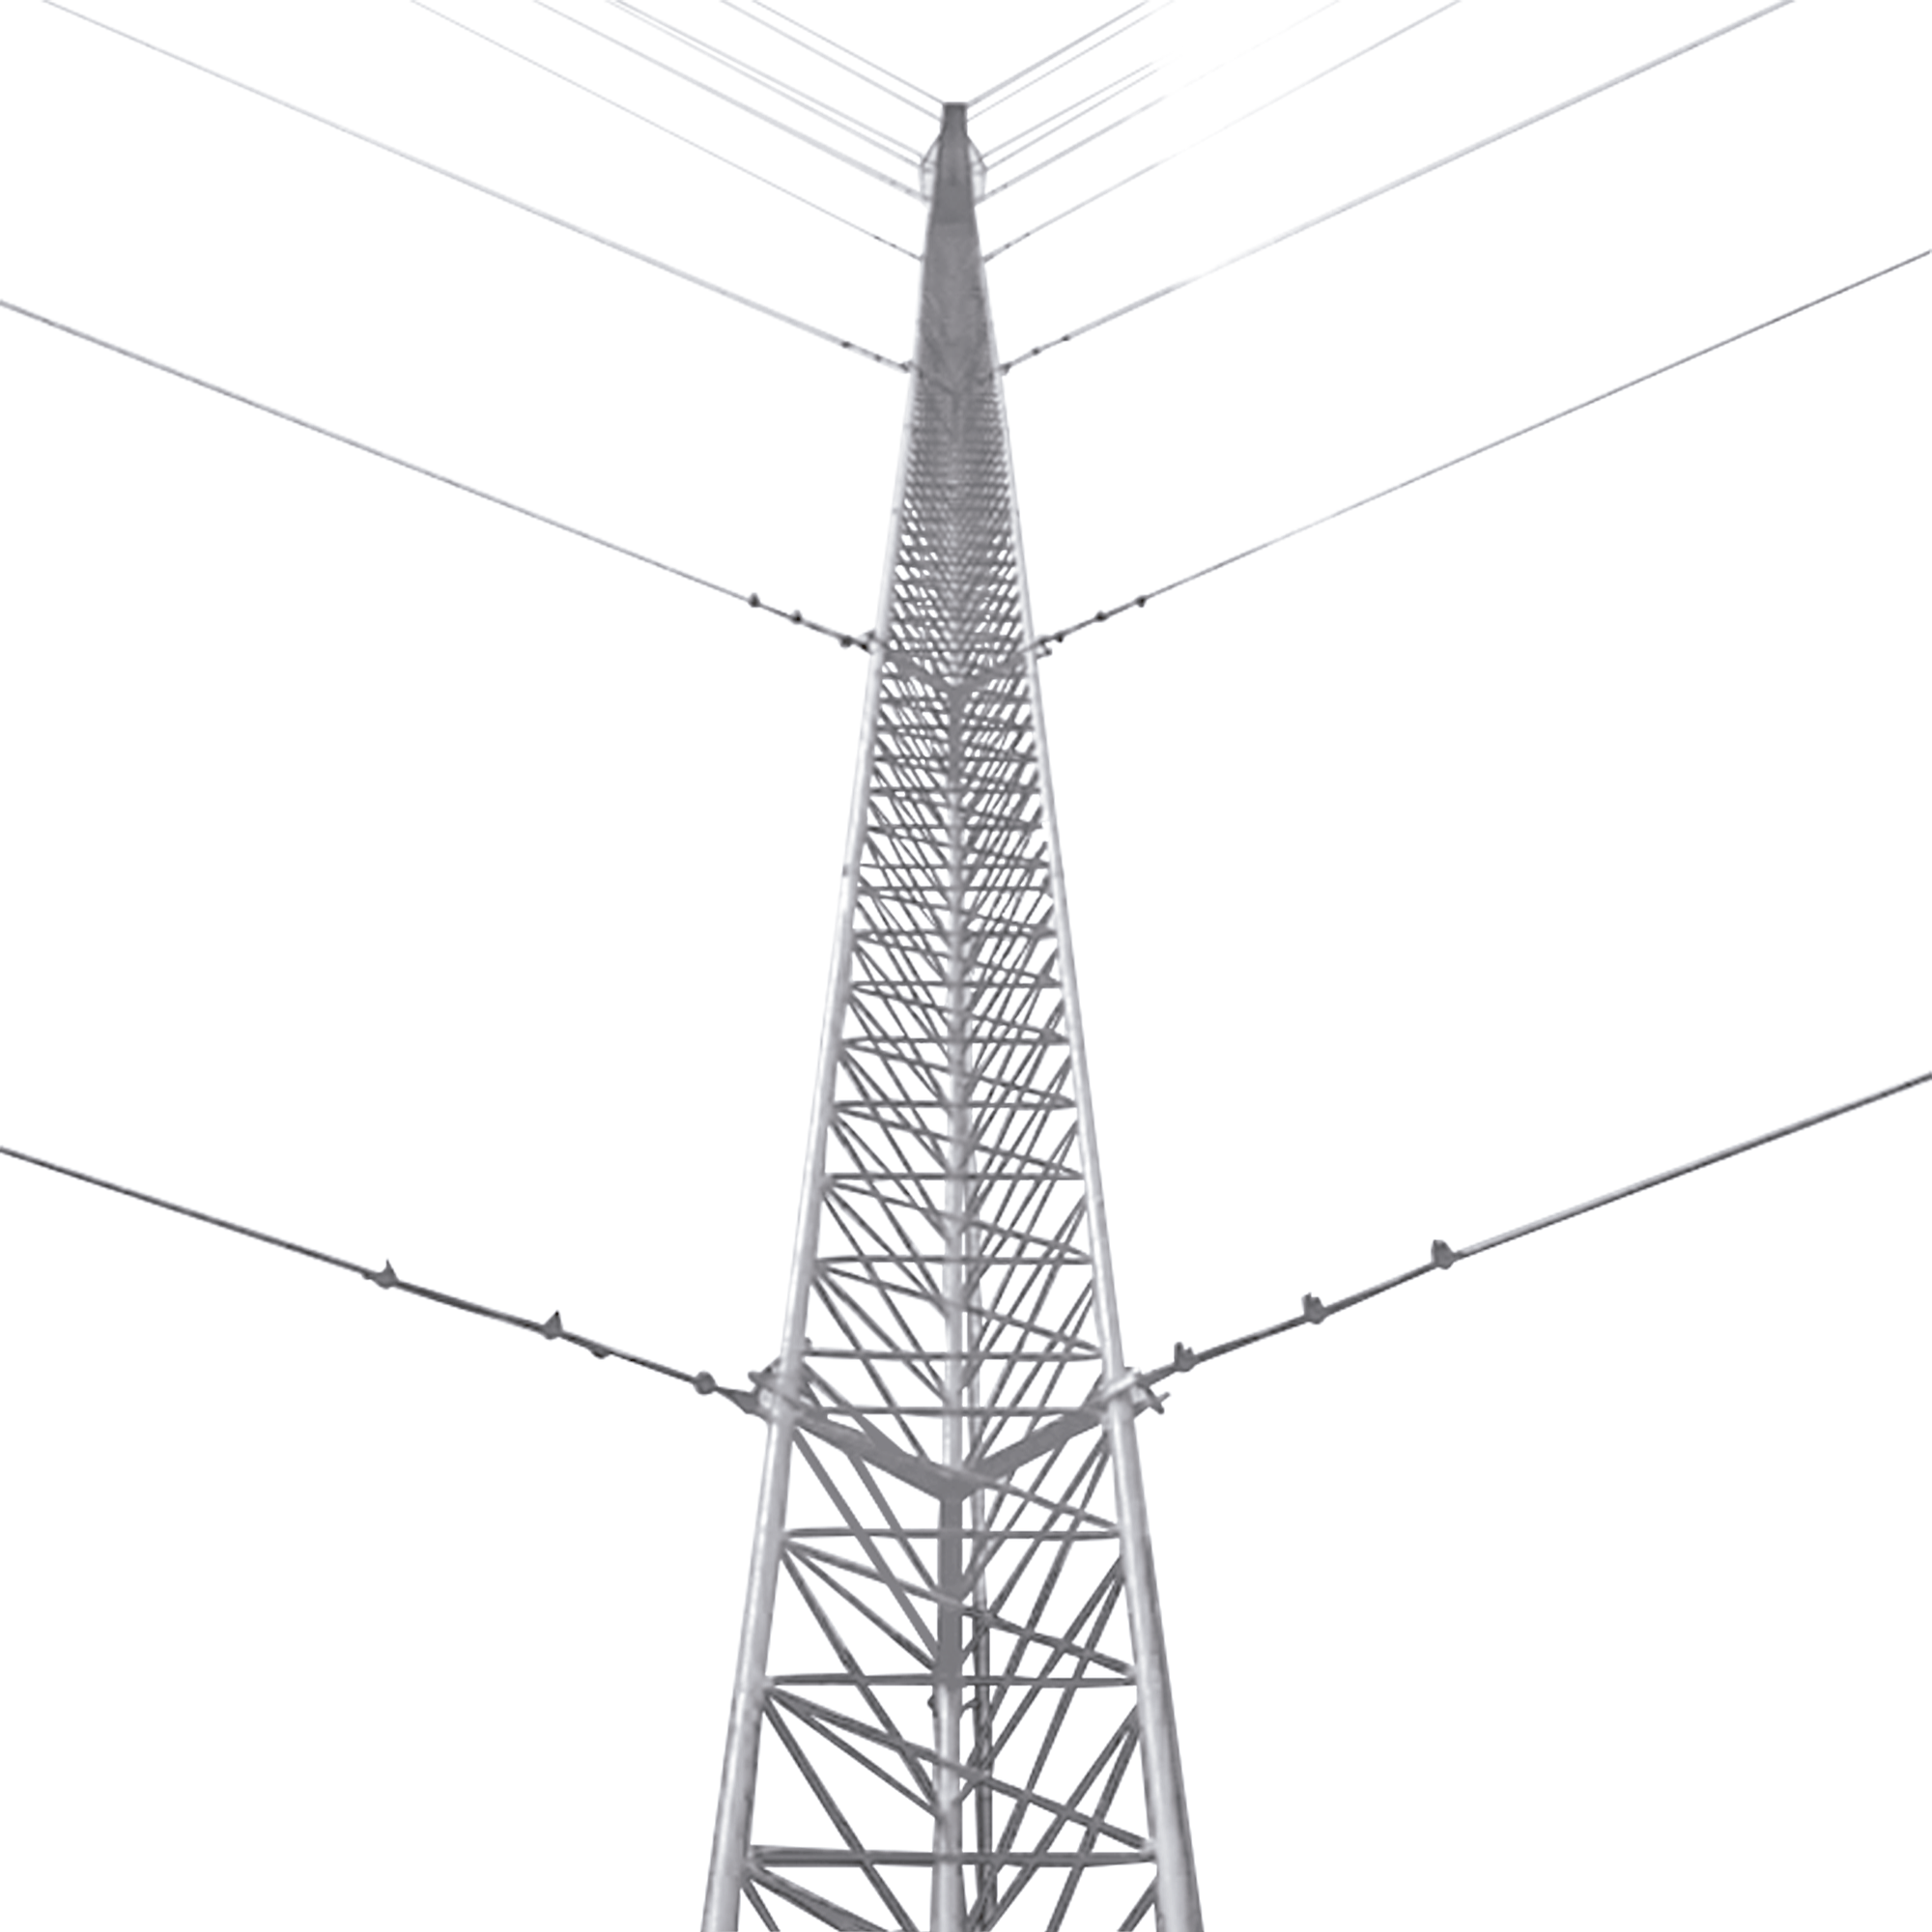 KTZ-30E-030P: KTZ30E030P: Kit de Torre Arriostrada de Techo de 30 m con Tramo STZ30 Galvanizado Electrol?tico (No incluye retenida).